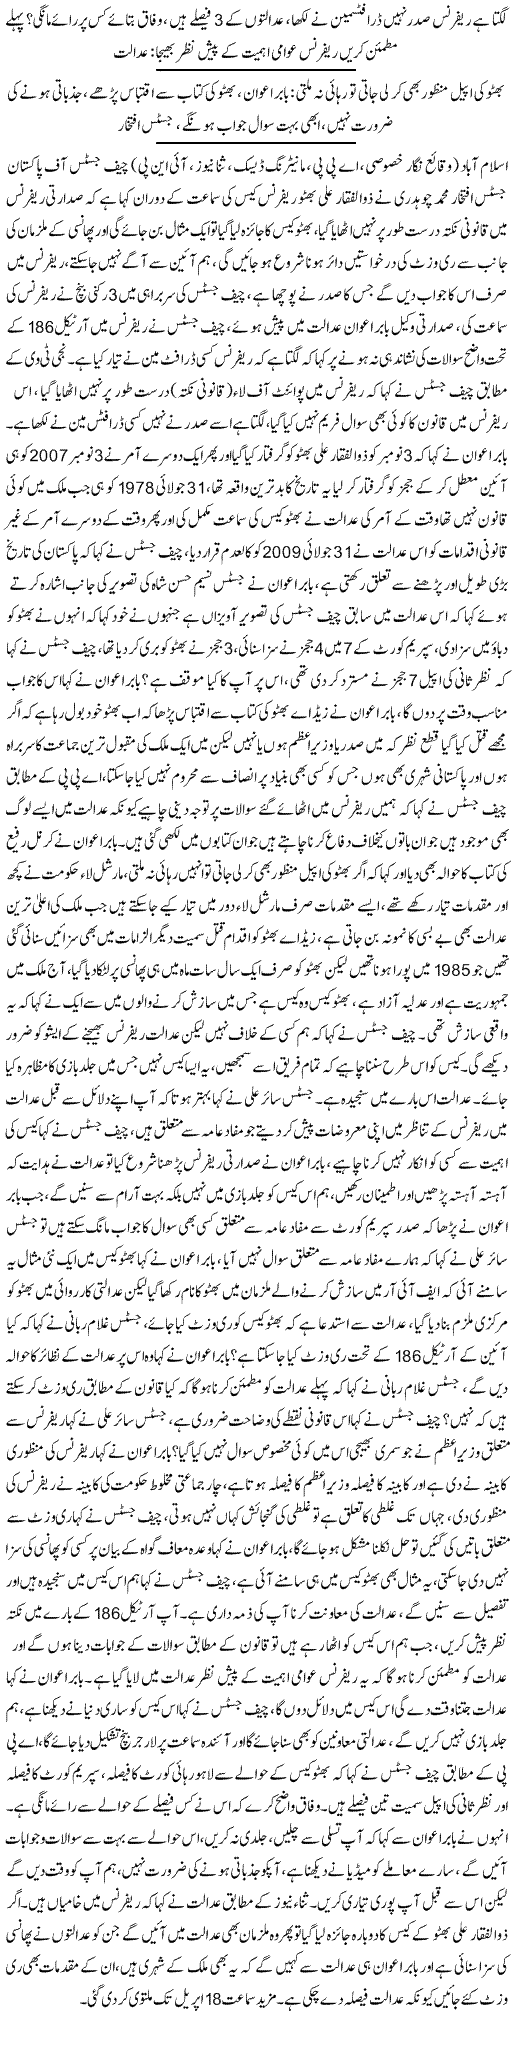 Opening Bhutto Case Will Open Pandora Box Iftikhar - News in Urdu